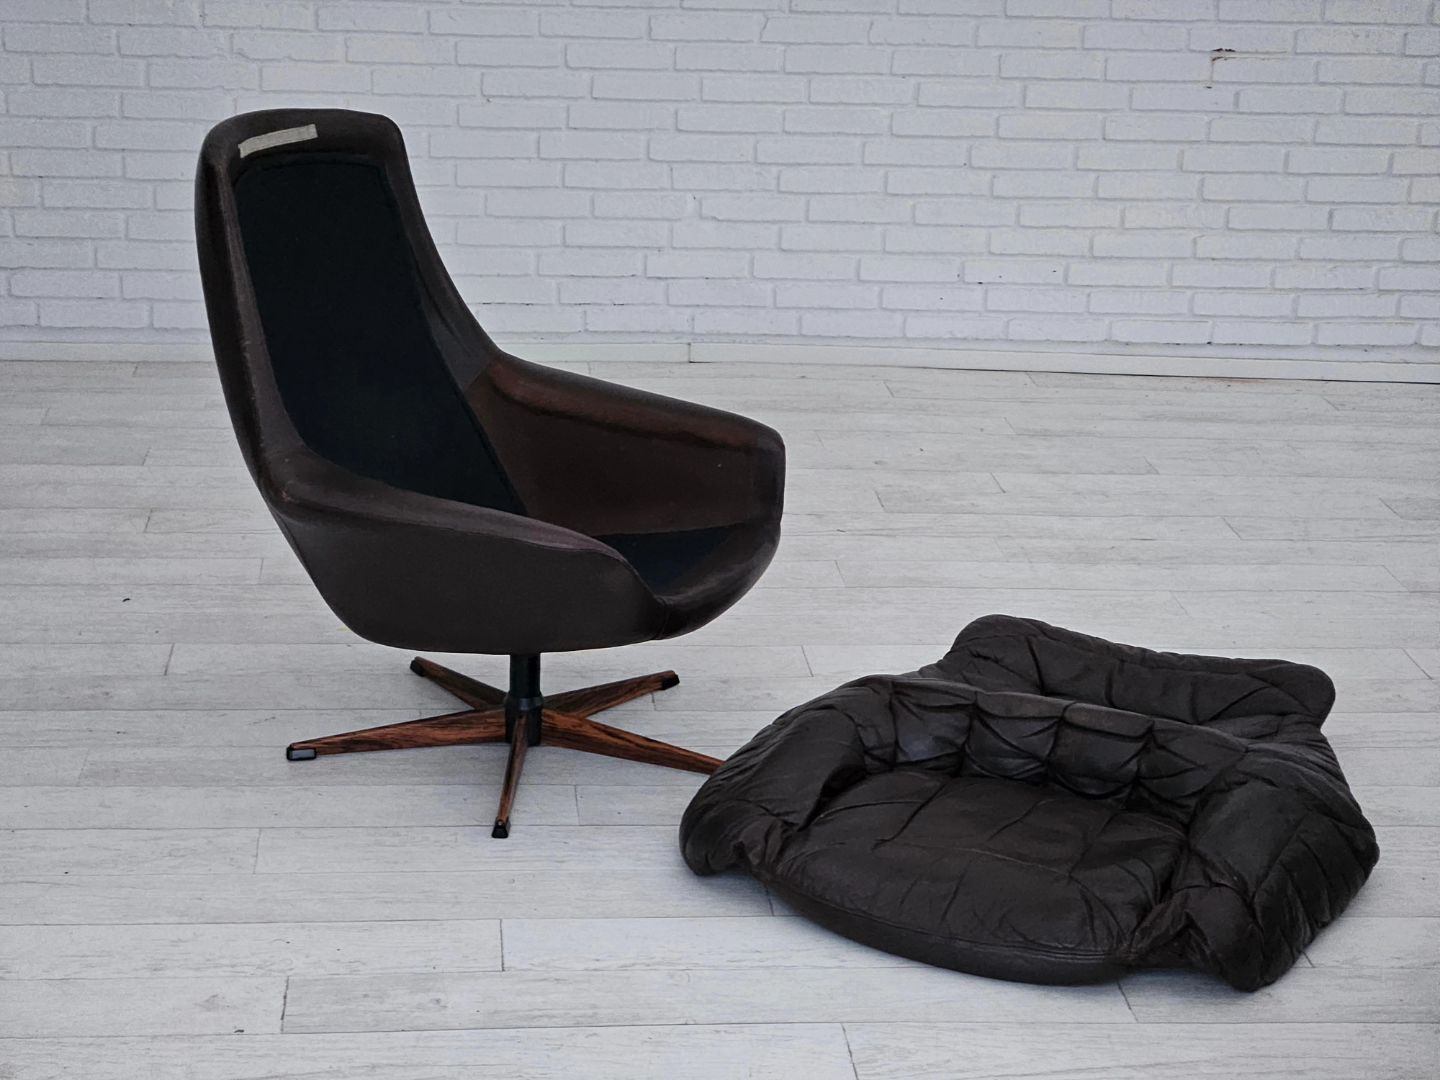 1970s, Vintage Danish leather armchair by H.W.Klein, original good condition.